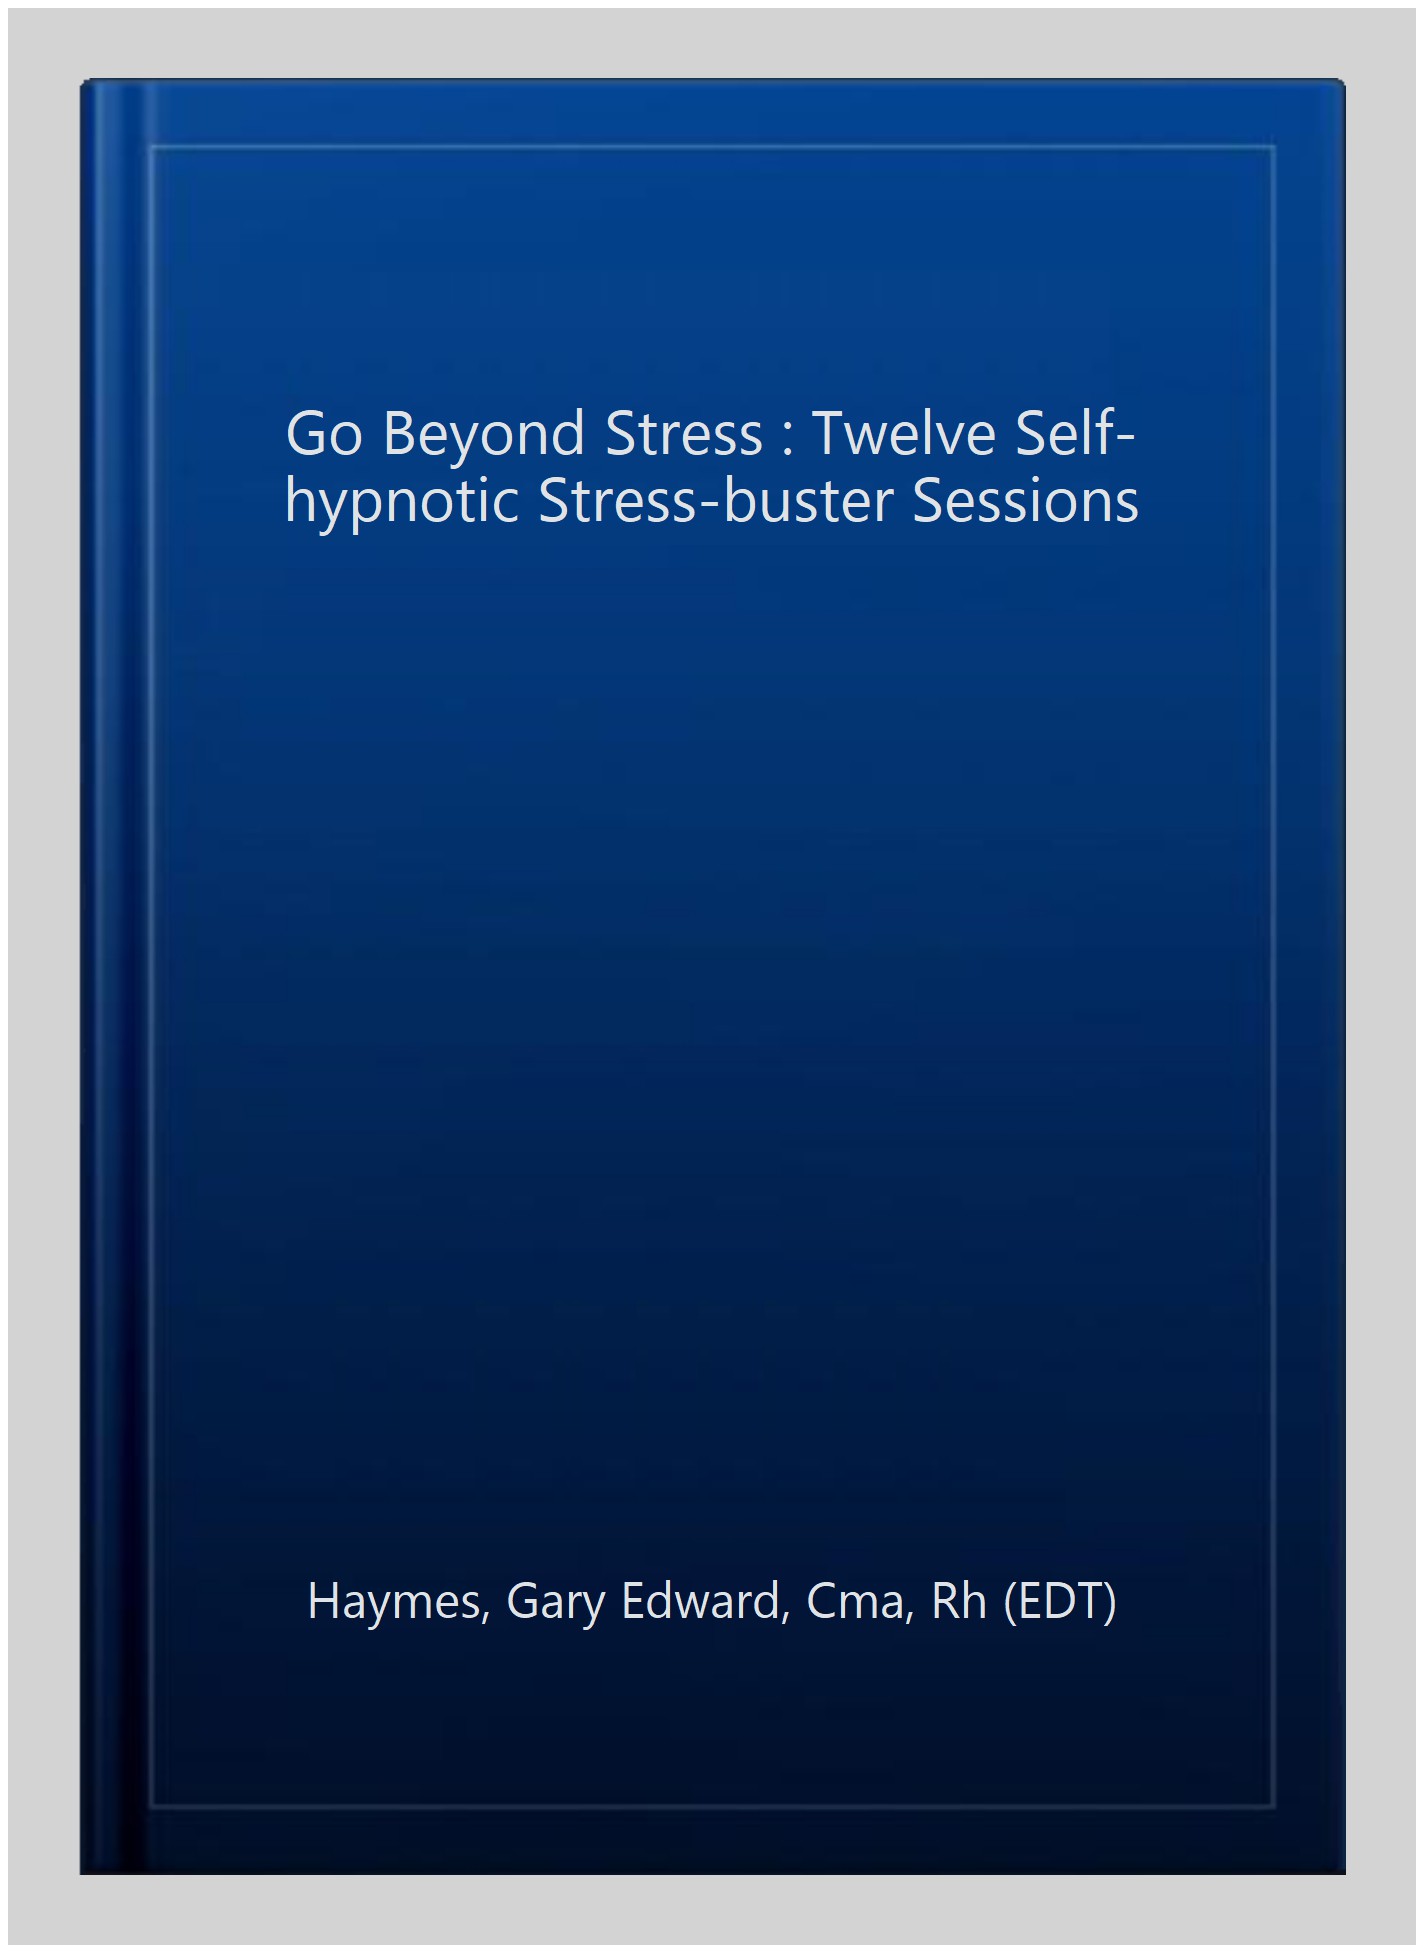 Go Beyond Stress : Twelve Self-hypnotic Stress-buster Sessions - Haymes, Gary Edward, Cma, Rh (EDT)